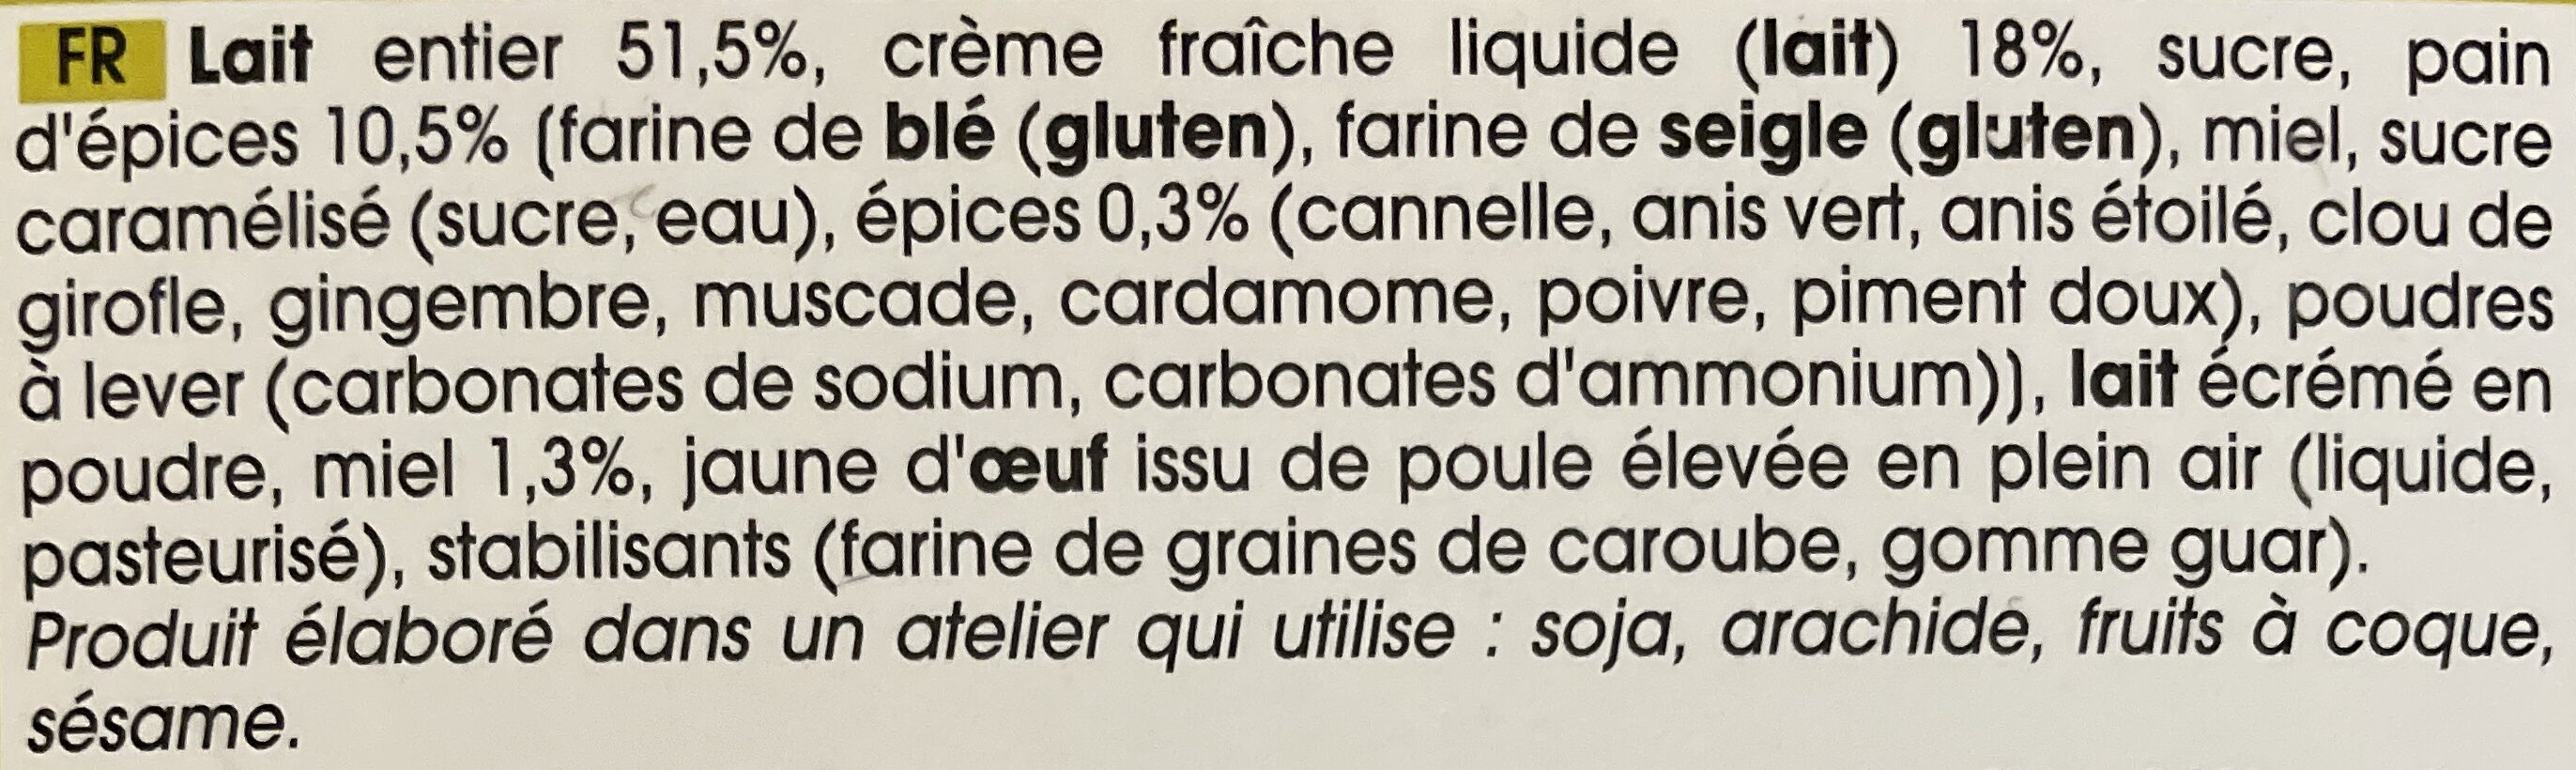 Glace pain d'epices - Ingredients - fr